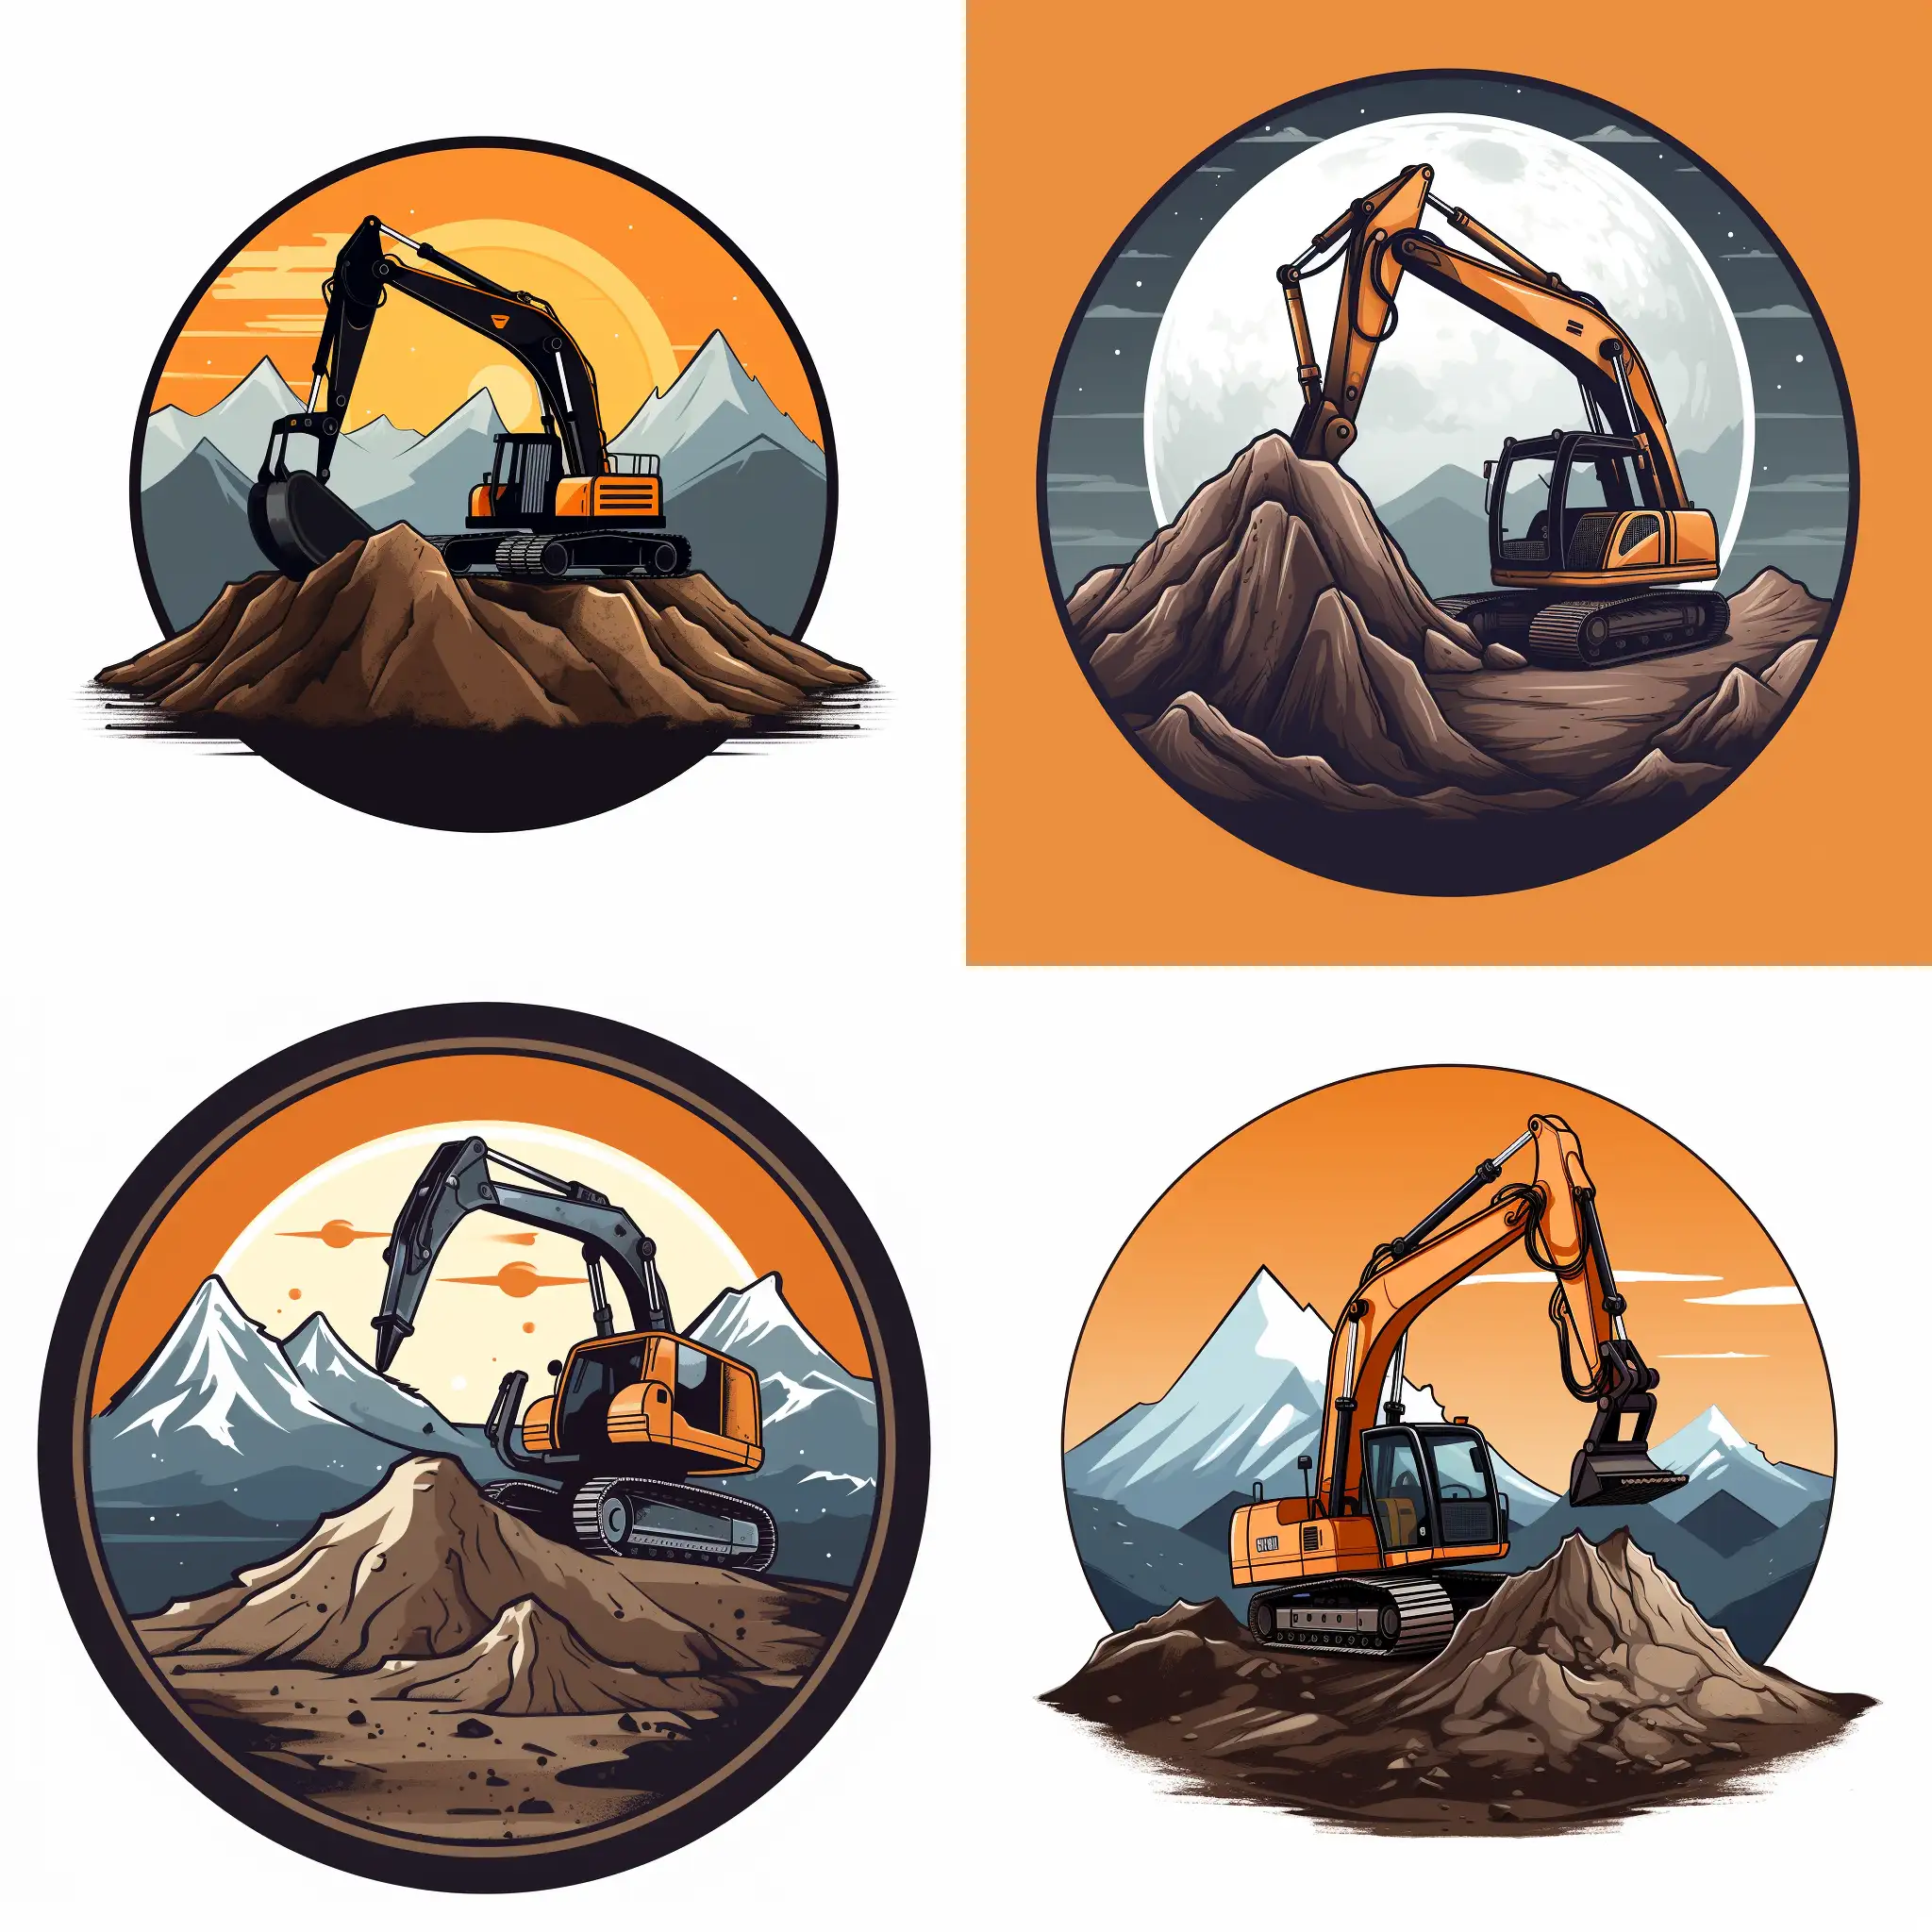 Bridger-McDonald-Excavation-Vibrant-Orange-Excavator-on-Dirt-Mound-Against-Grey-Mountain-Backdrop